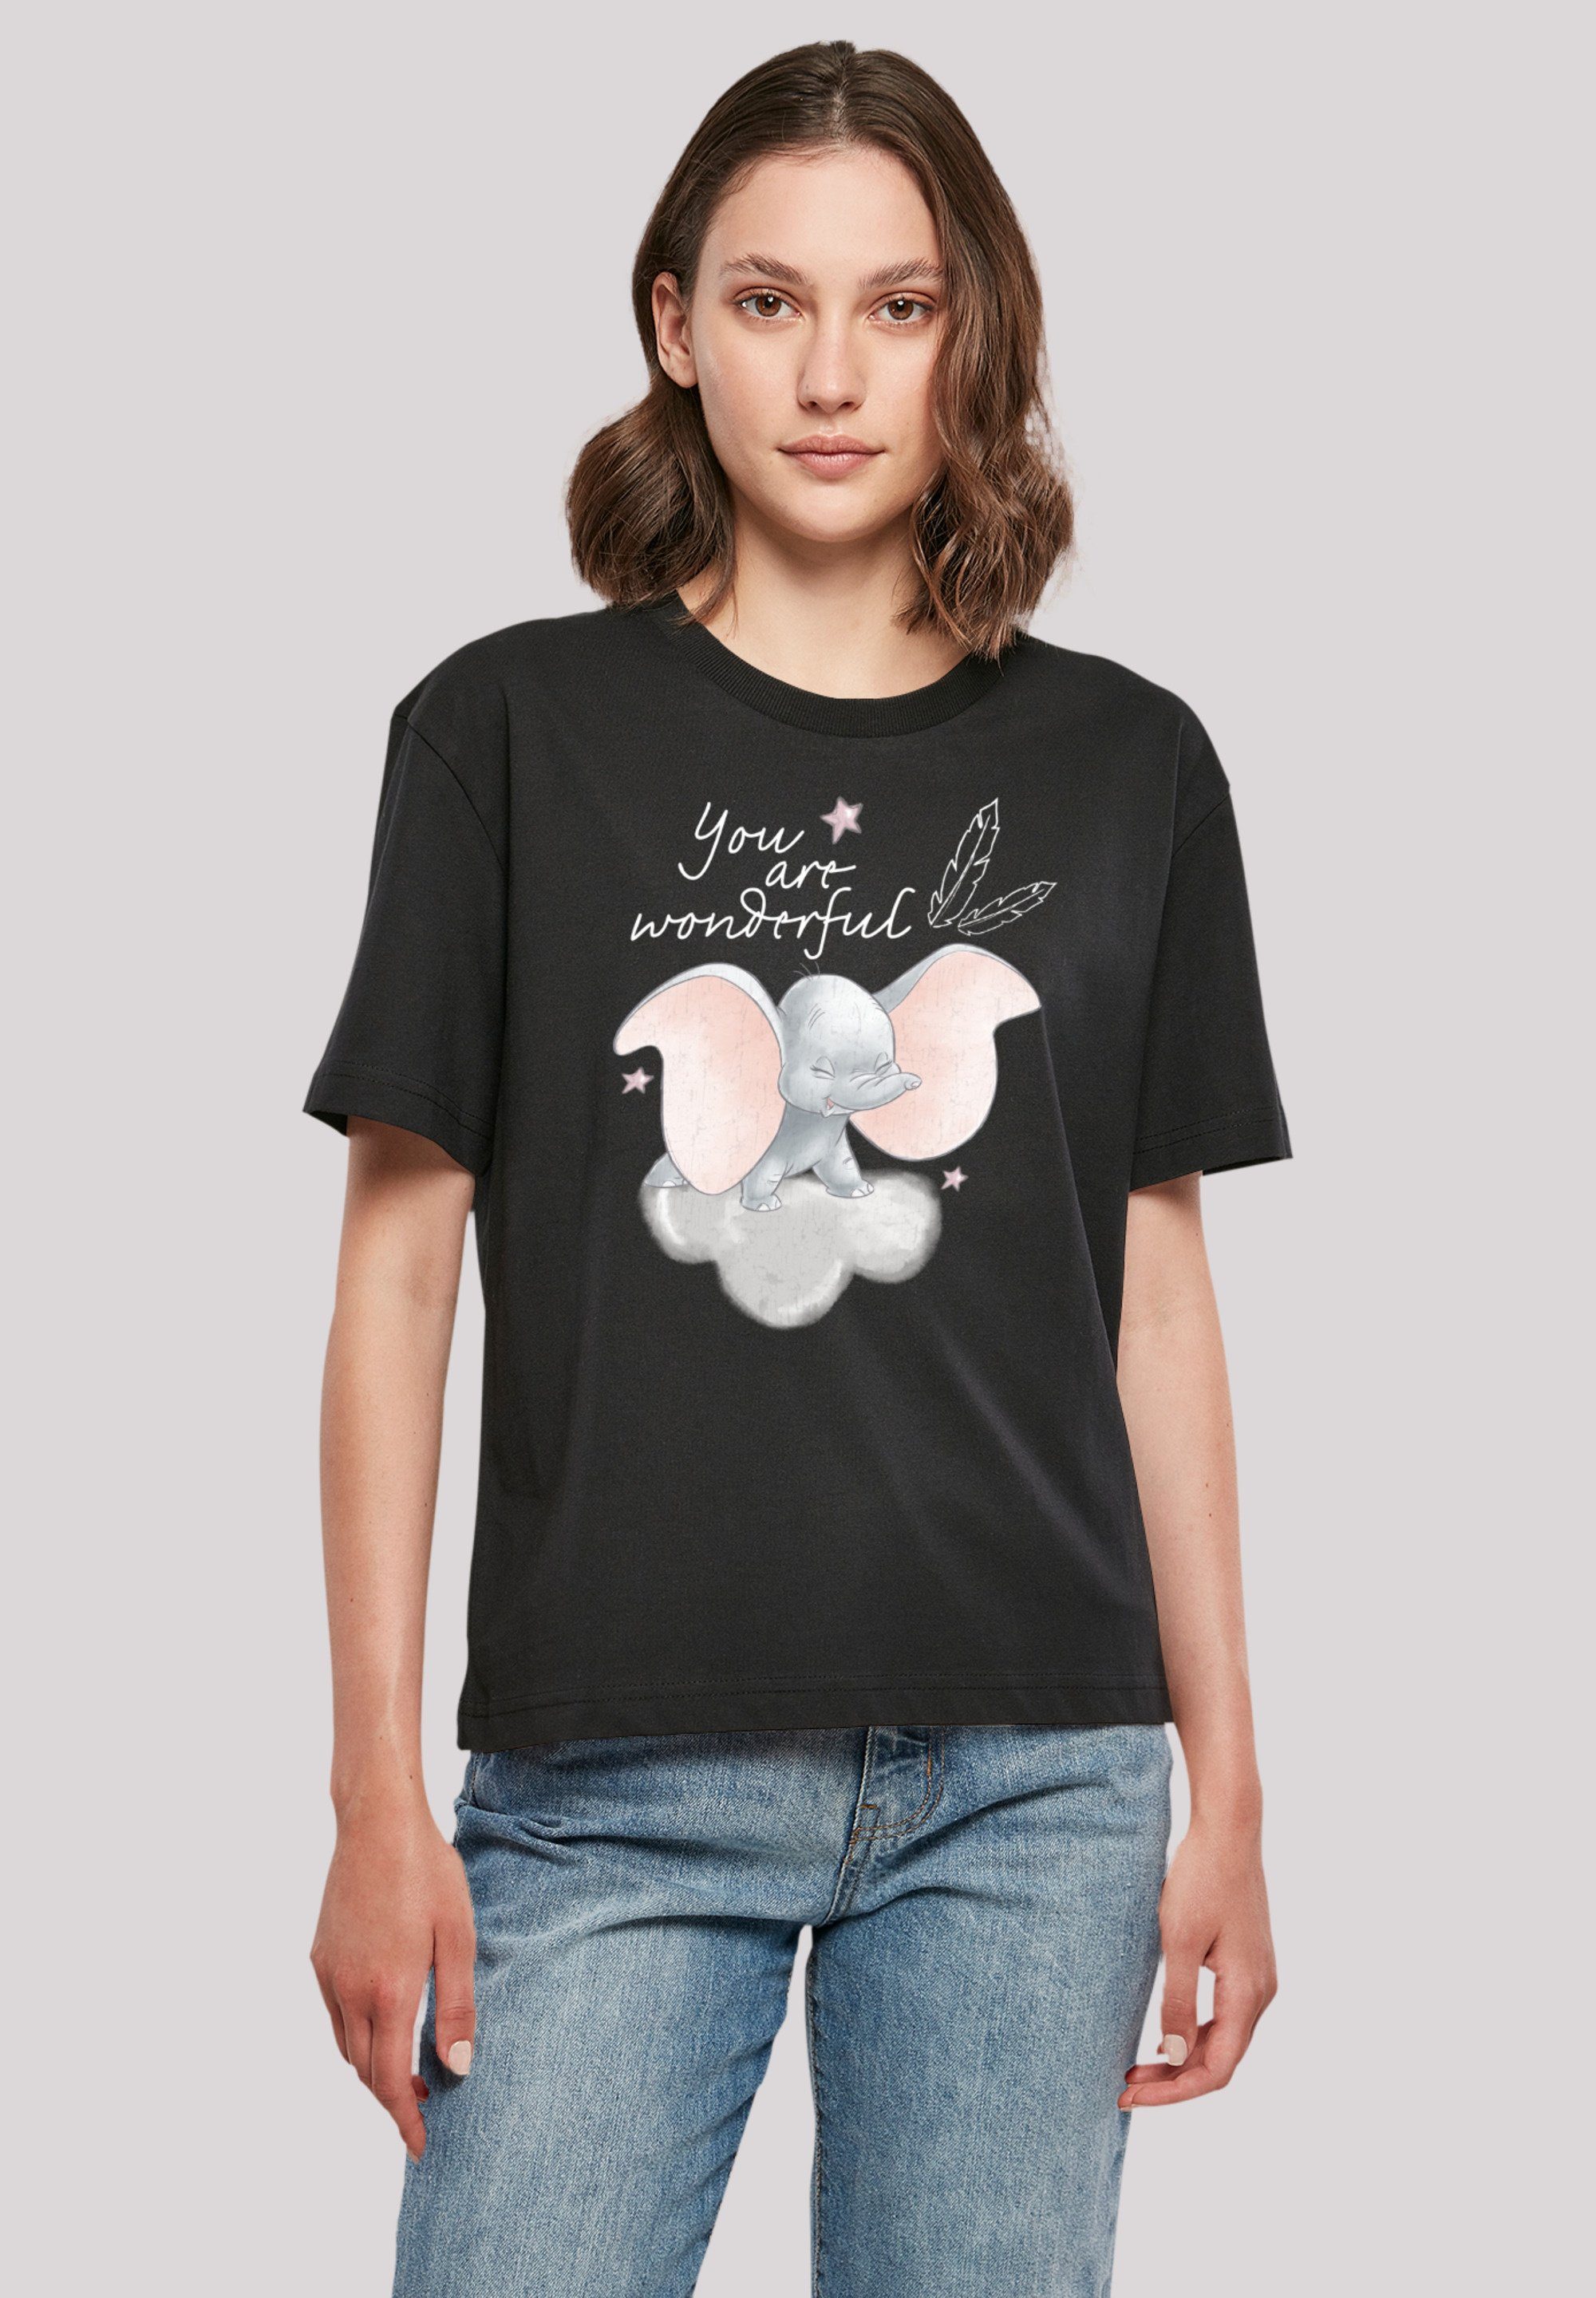 F4NT4STIC T-Shirt Disney Dumbo You Are Wonderful Premium Qualität